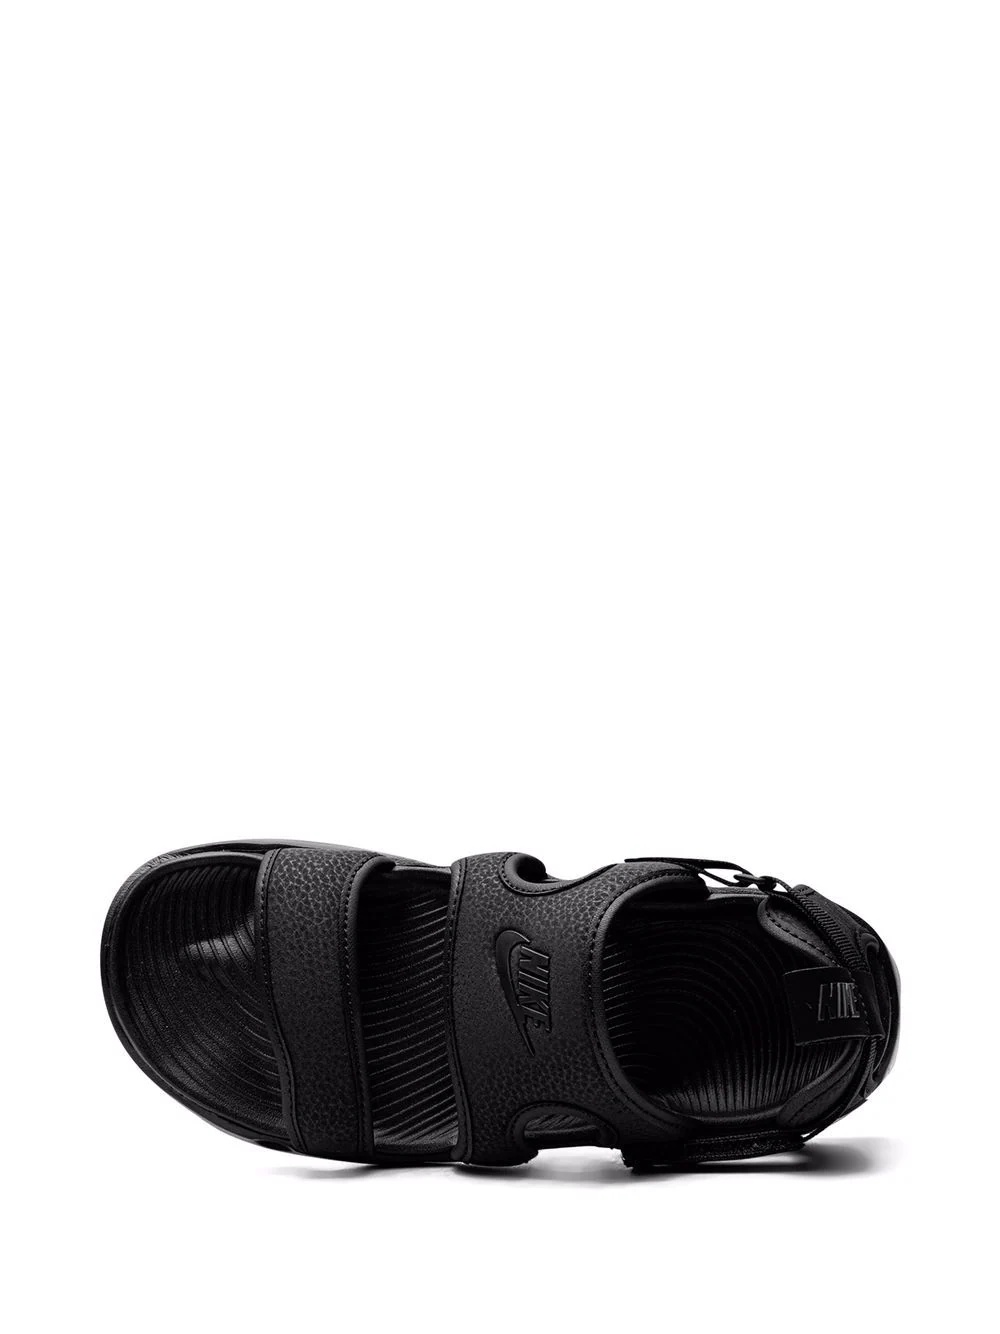 Owaysis sandals "Triple Black" - 4